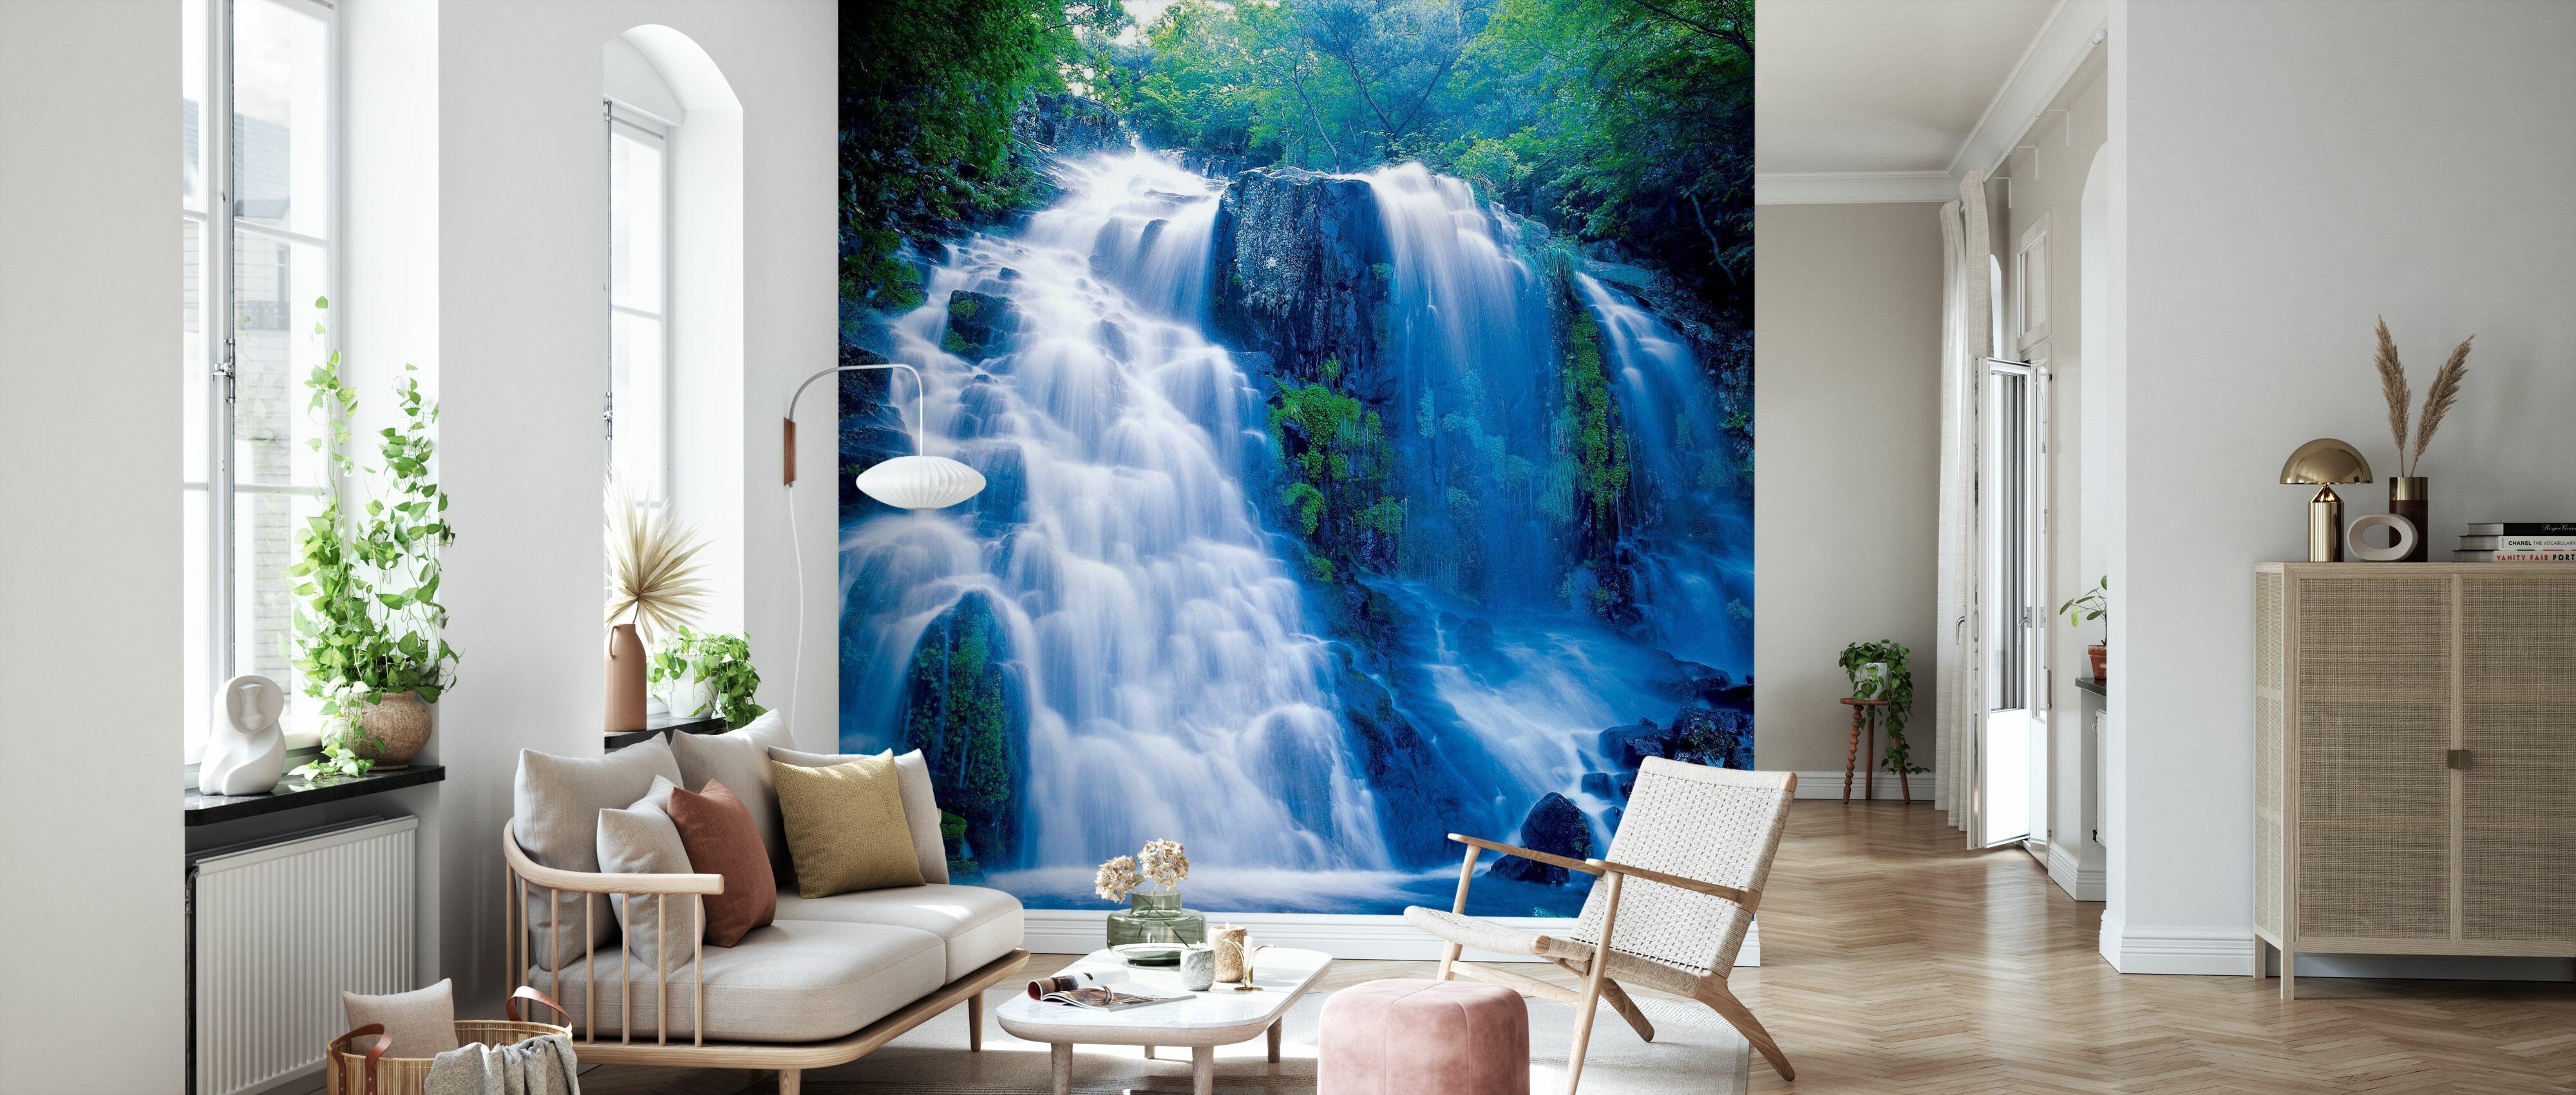 Plitvice Lake Rocks Waterfall Full Wall Mural Photo Wallpaper Home Decal 3D Kids 